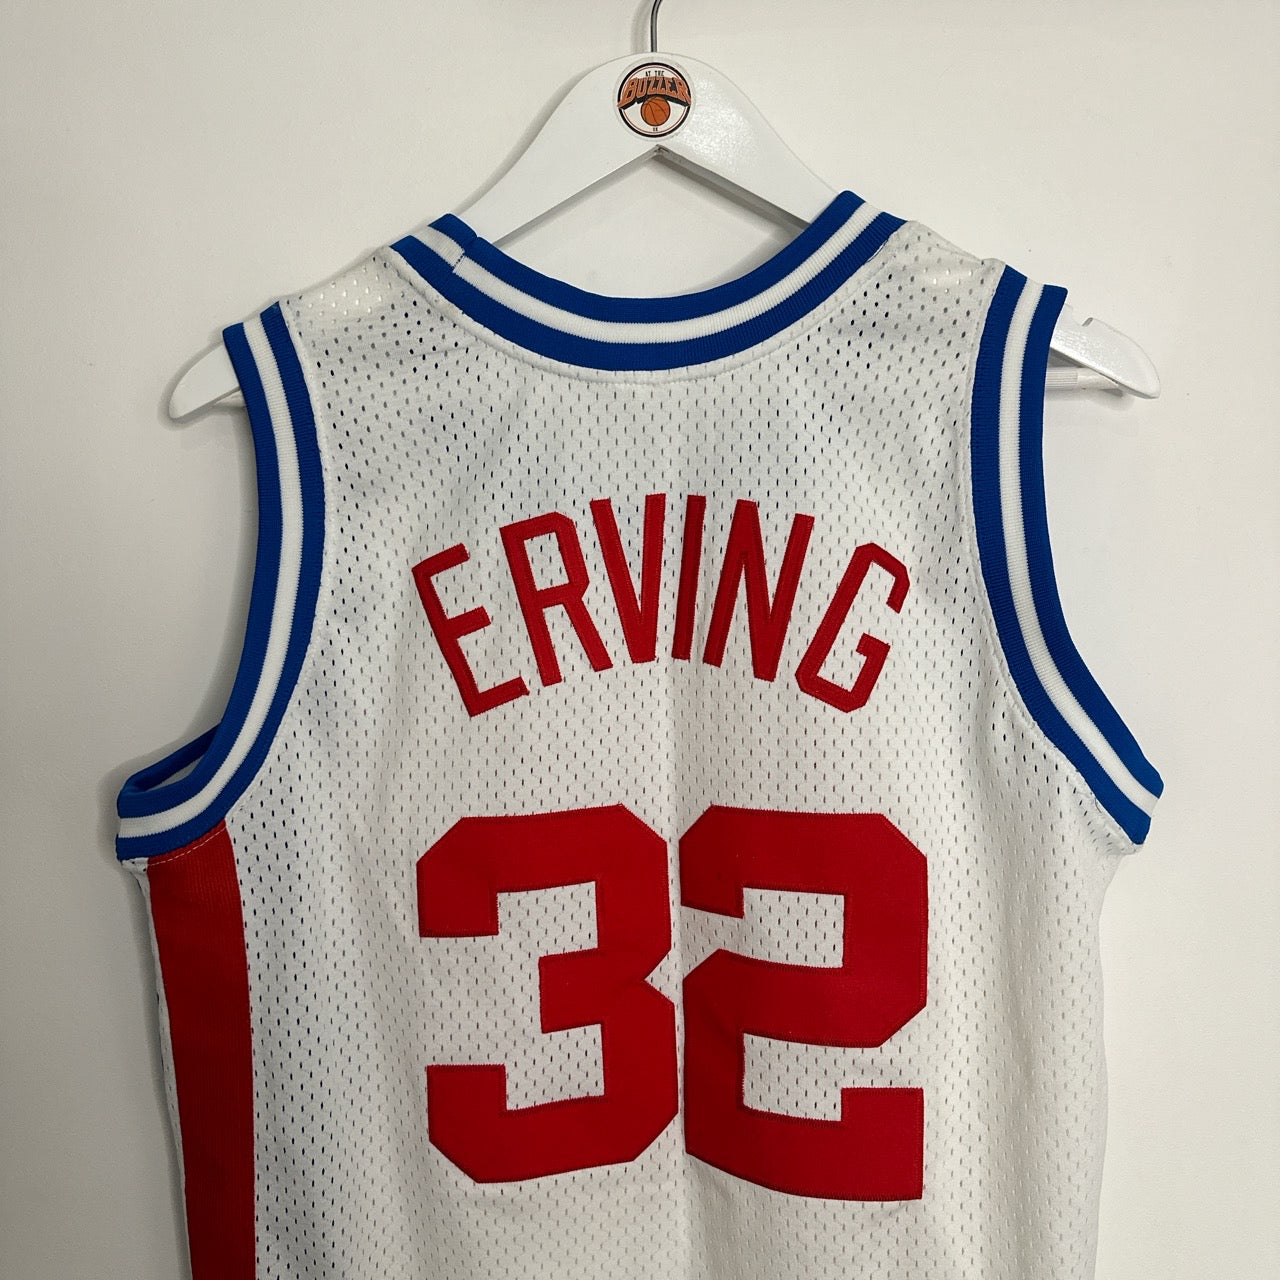 Philadelphia 76ers Julius Erving Champion jersey - Small